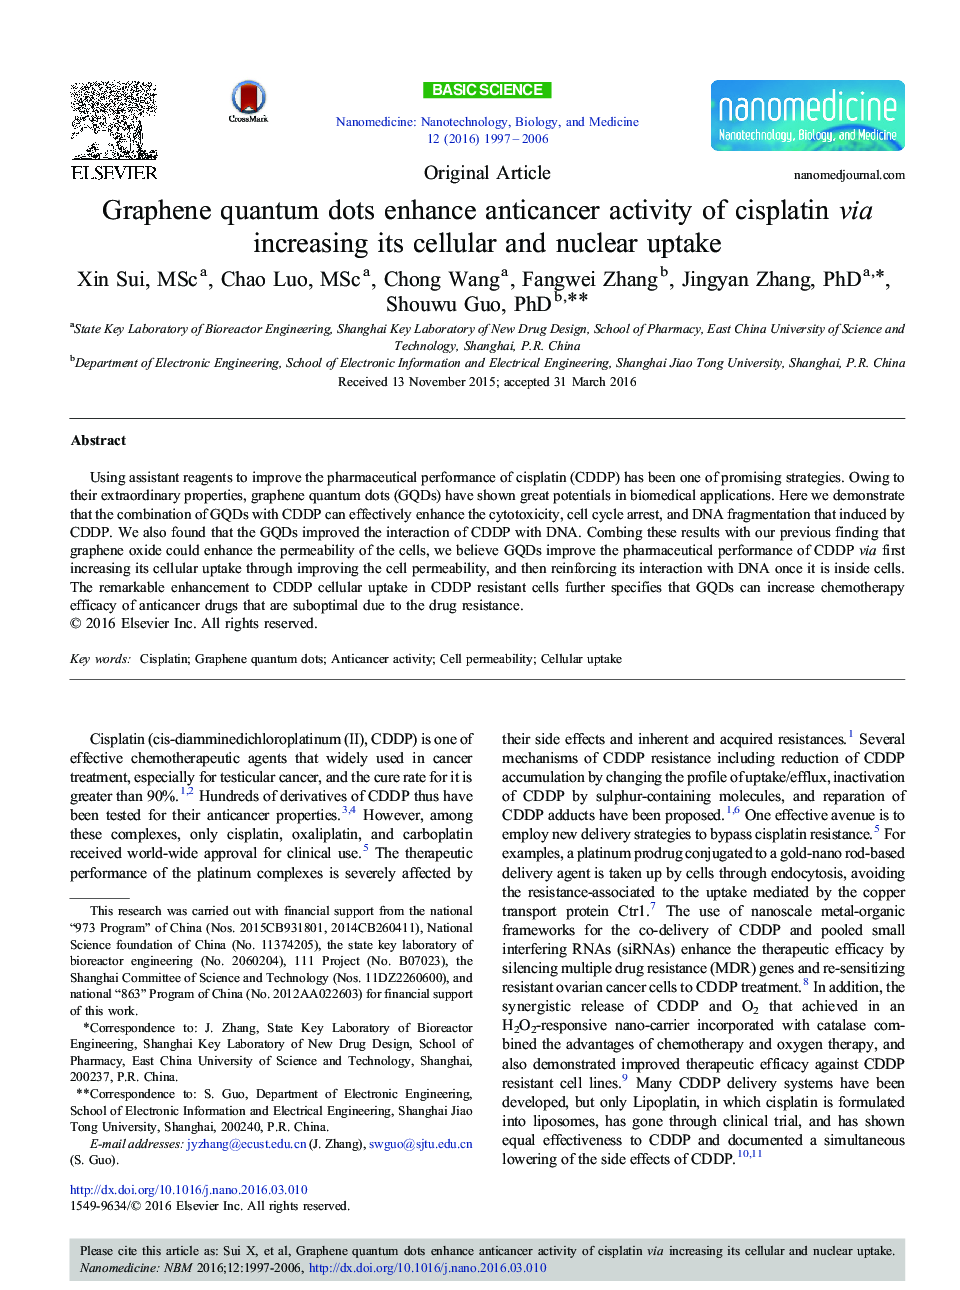 Graphene quantum dots enhance anticancer activity of cisplatin via increasing its cellular and nuclear uptake